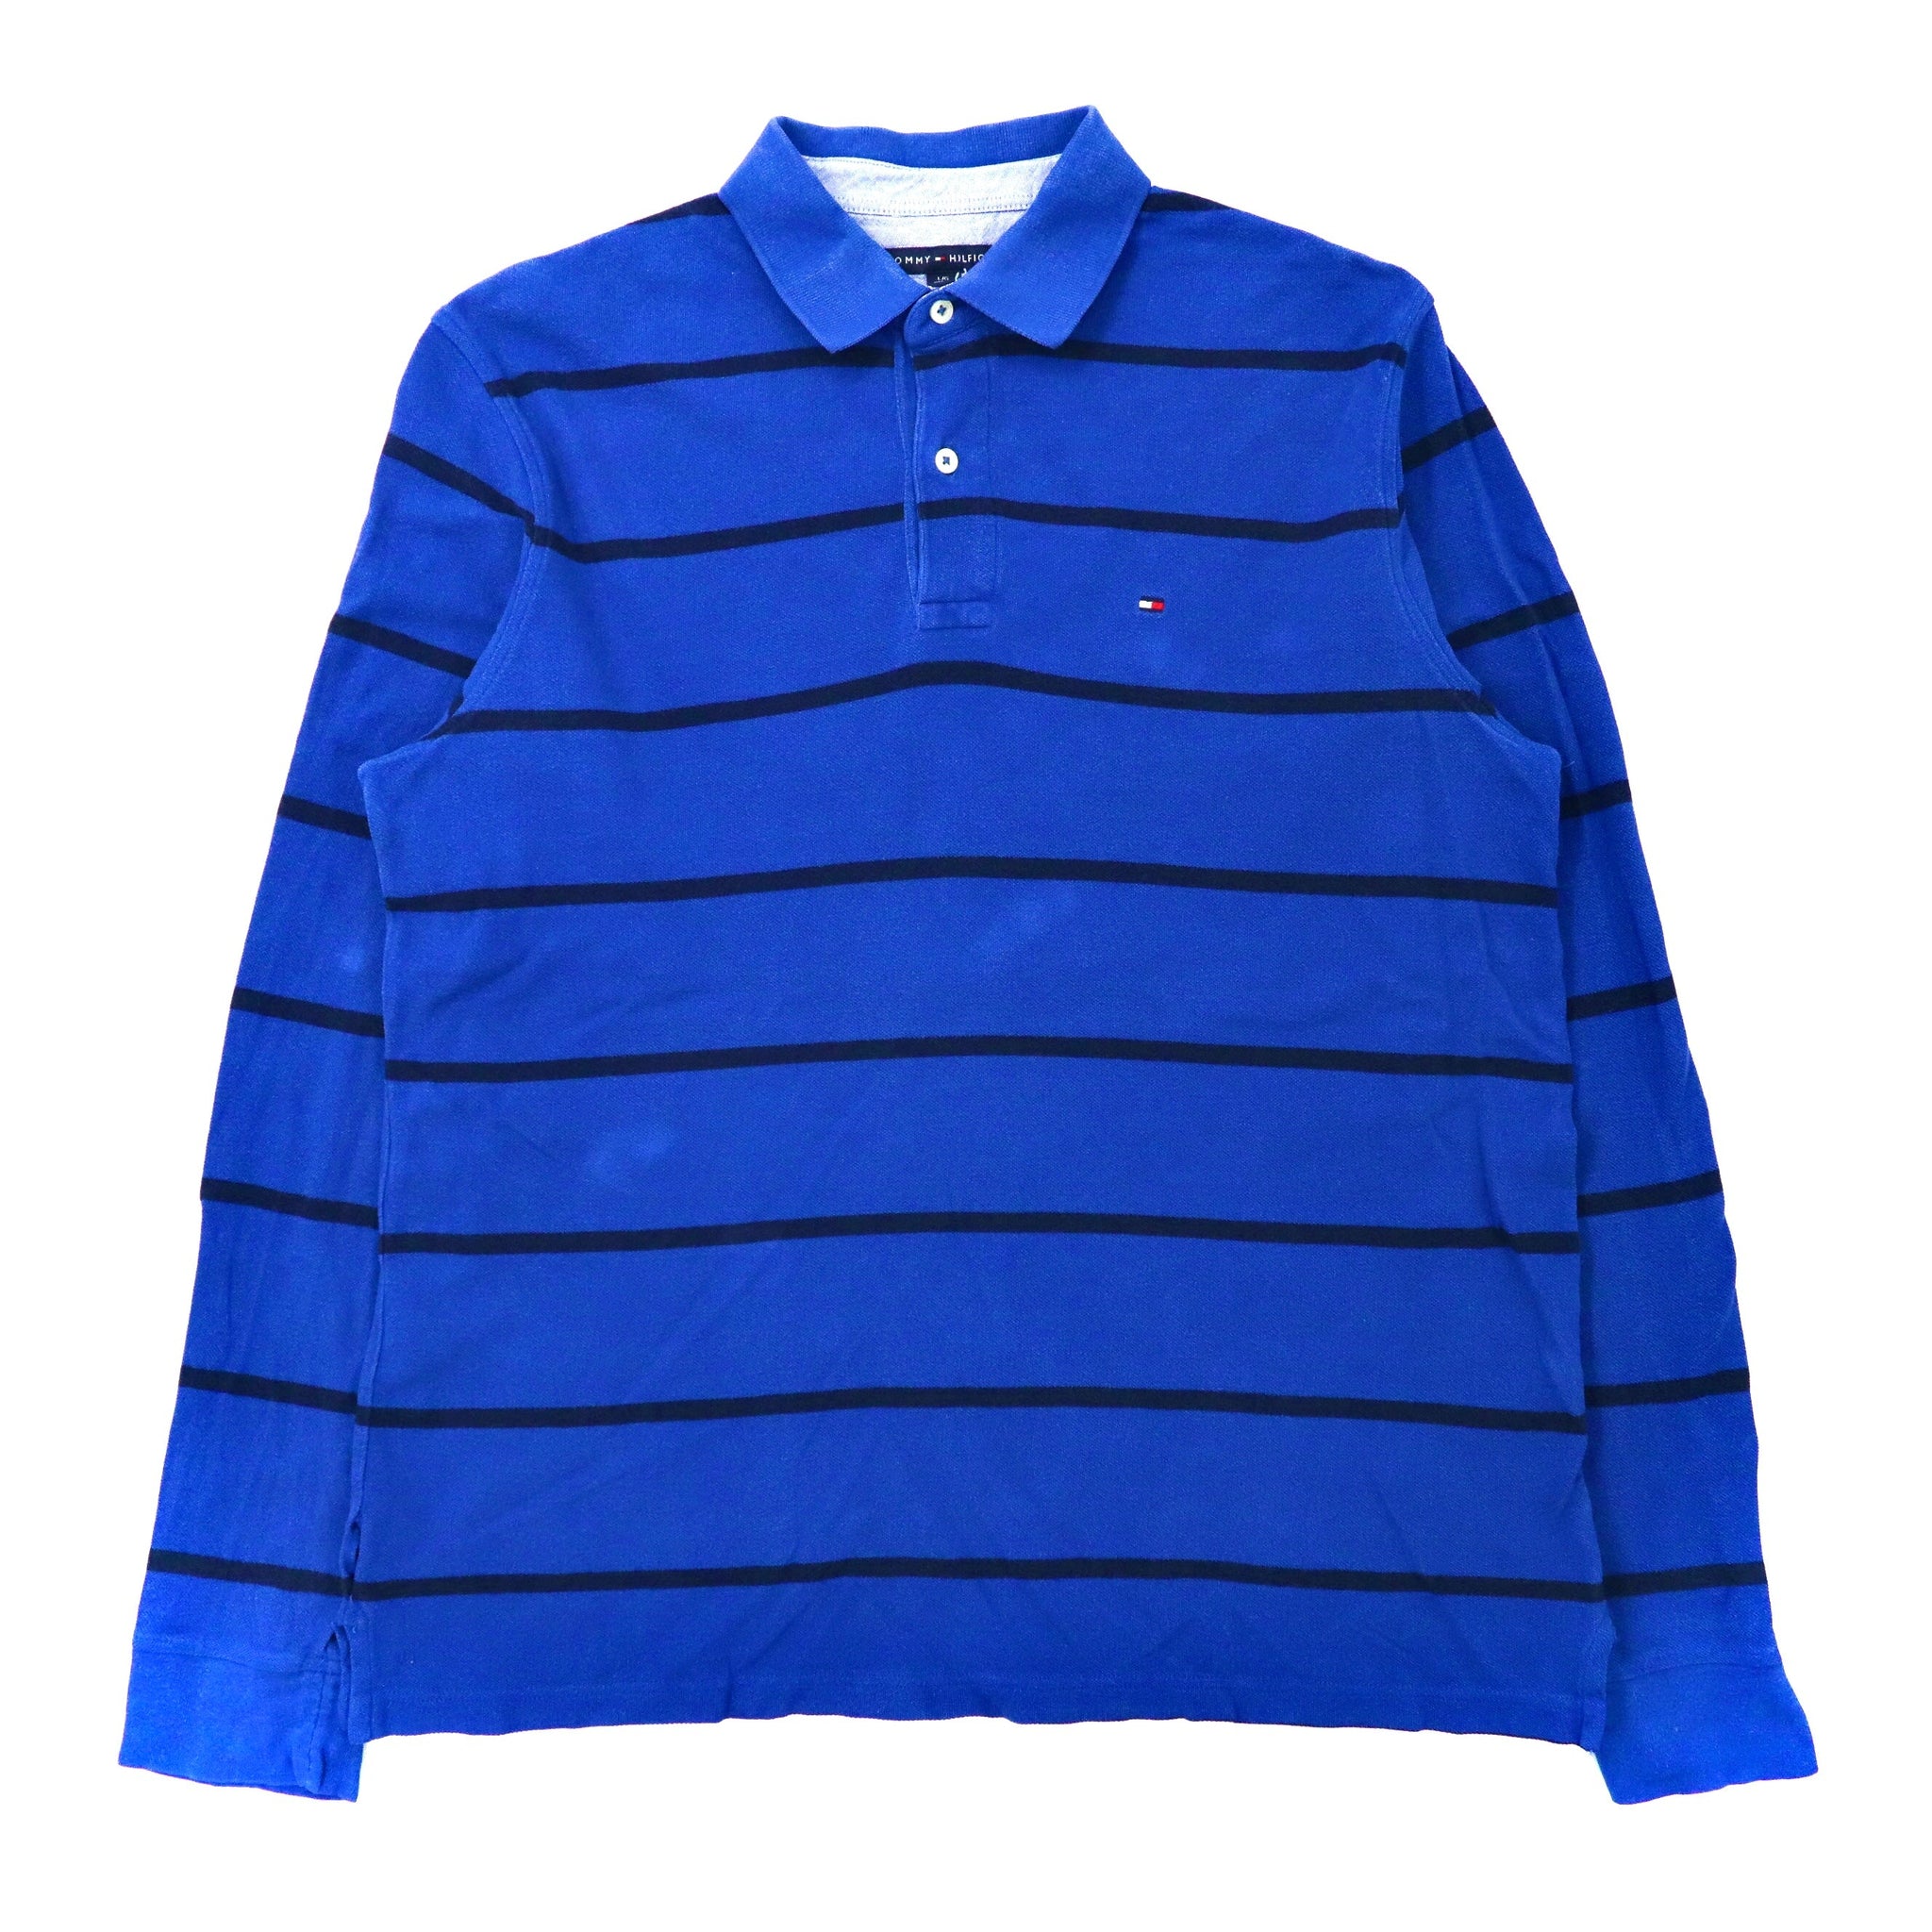 TOMMY HILFIGER ビッグサイズ 長袖ポロシャツ ラガーシャツ L ブルー ボーダー コットン フラッグロゴ刺繍